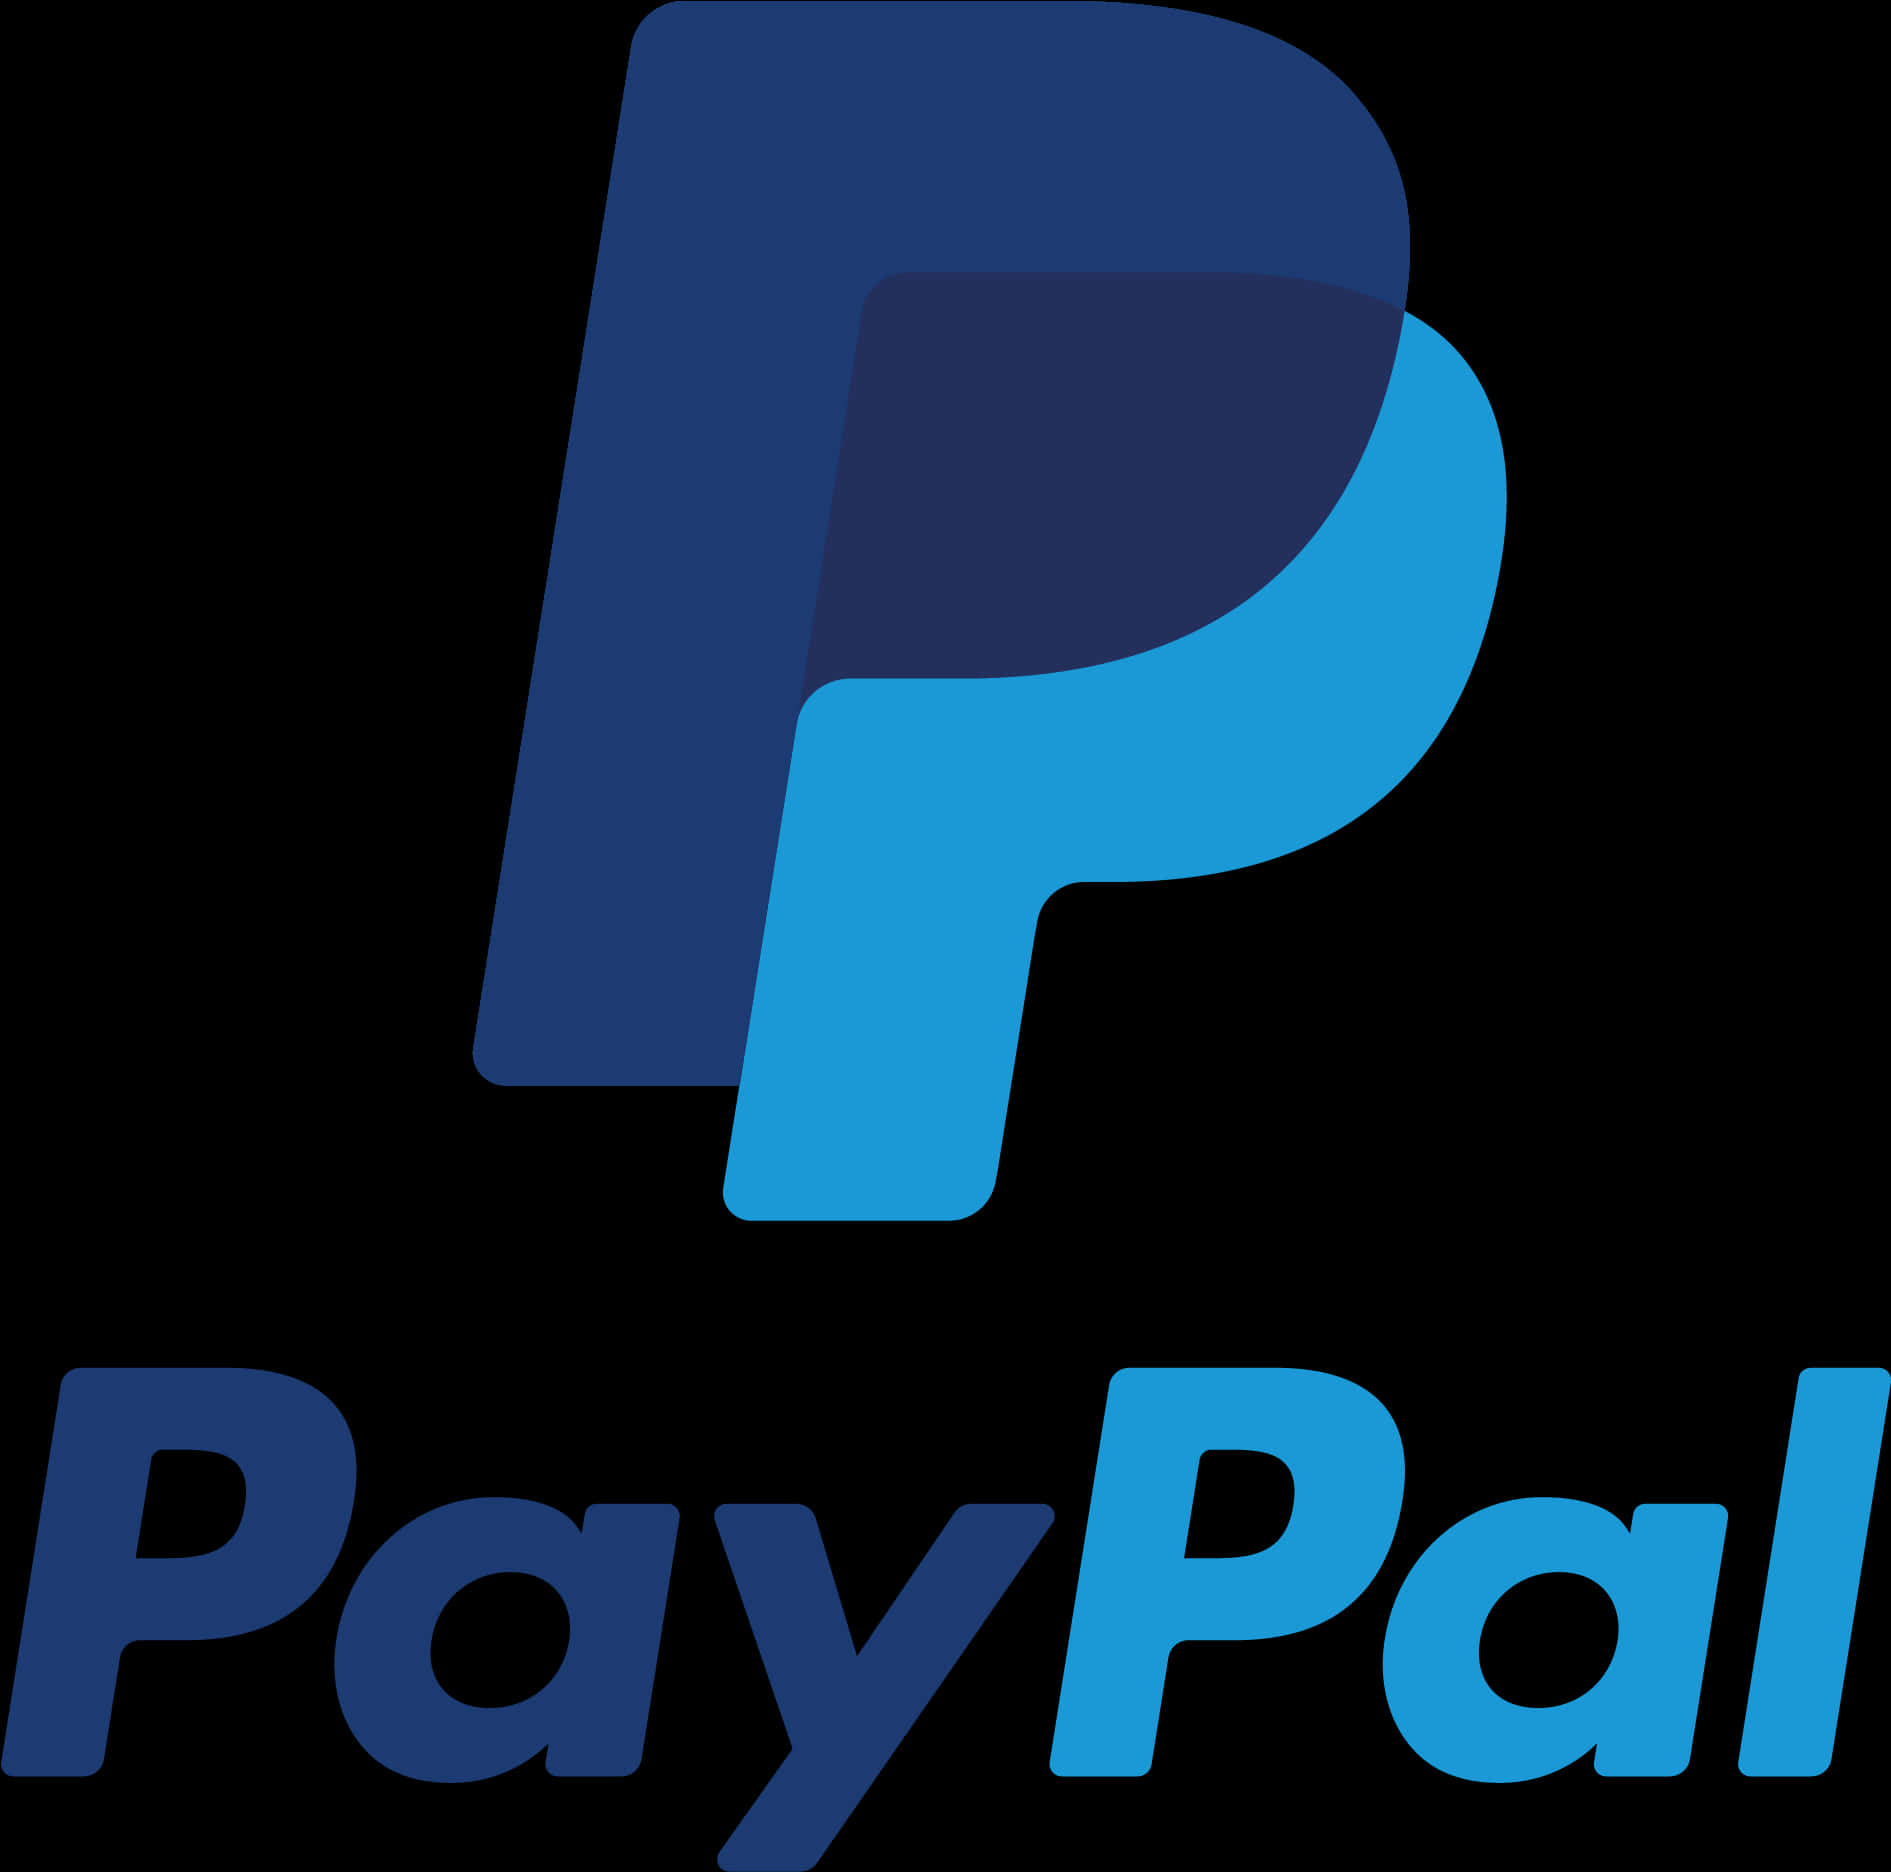 Pay Pal Logo Blue Background